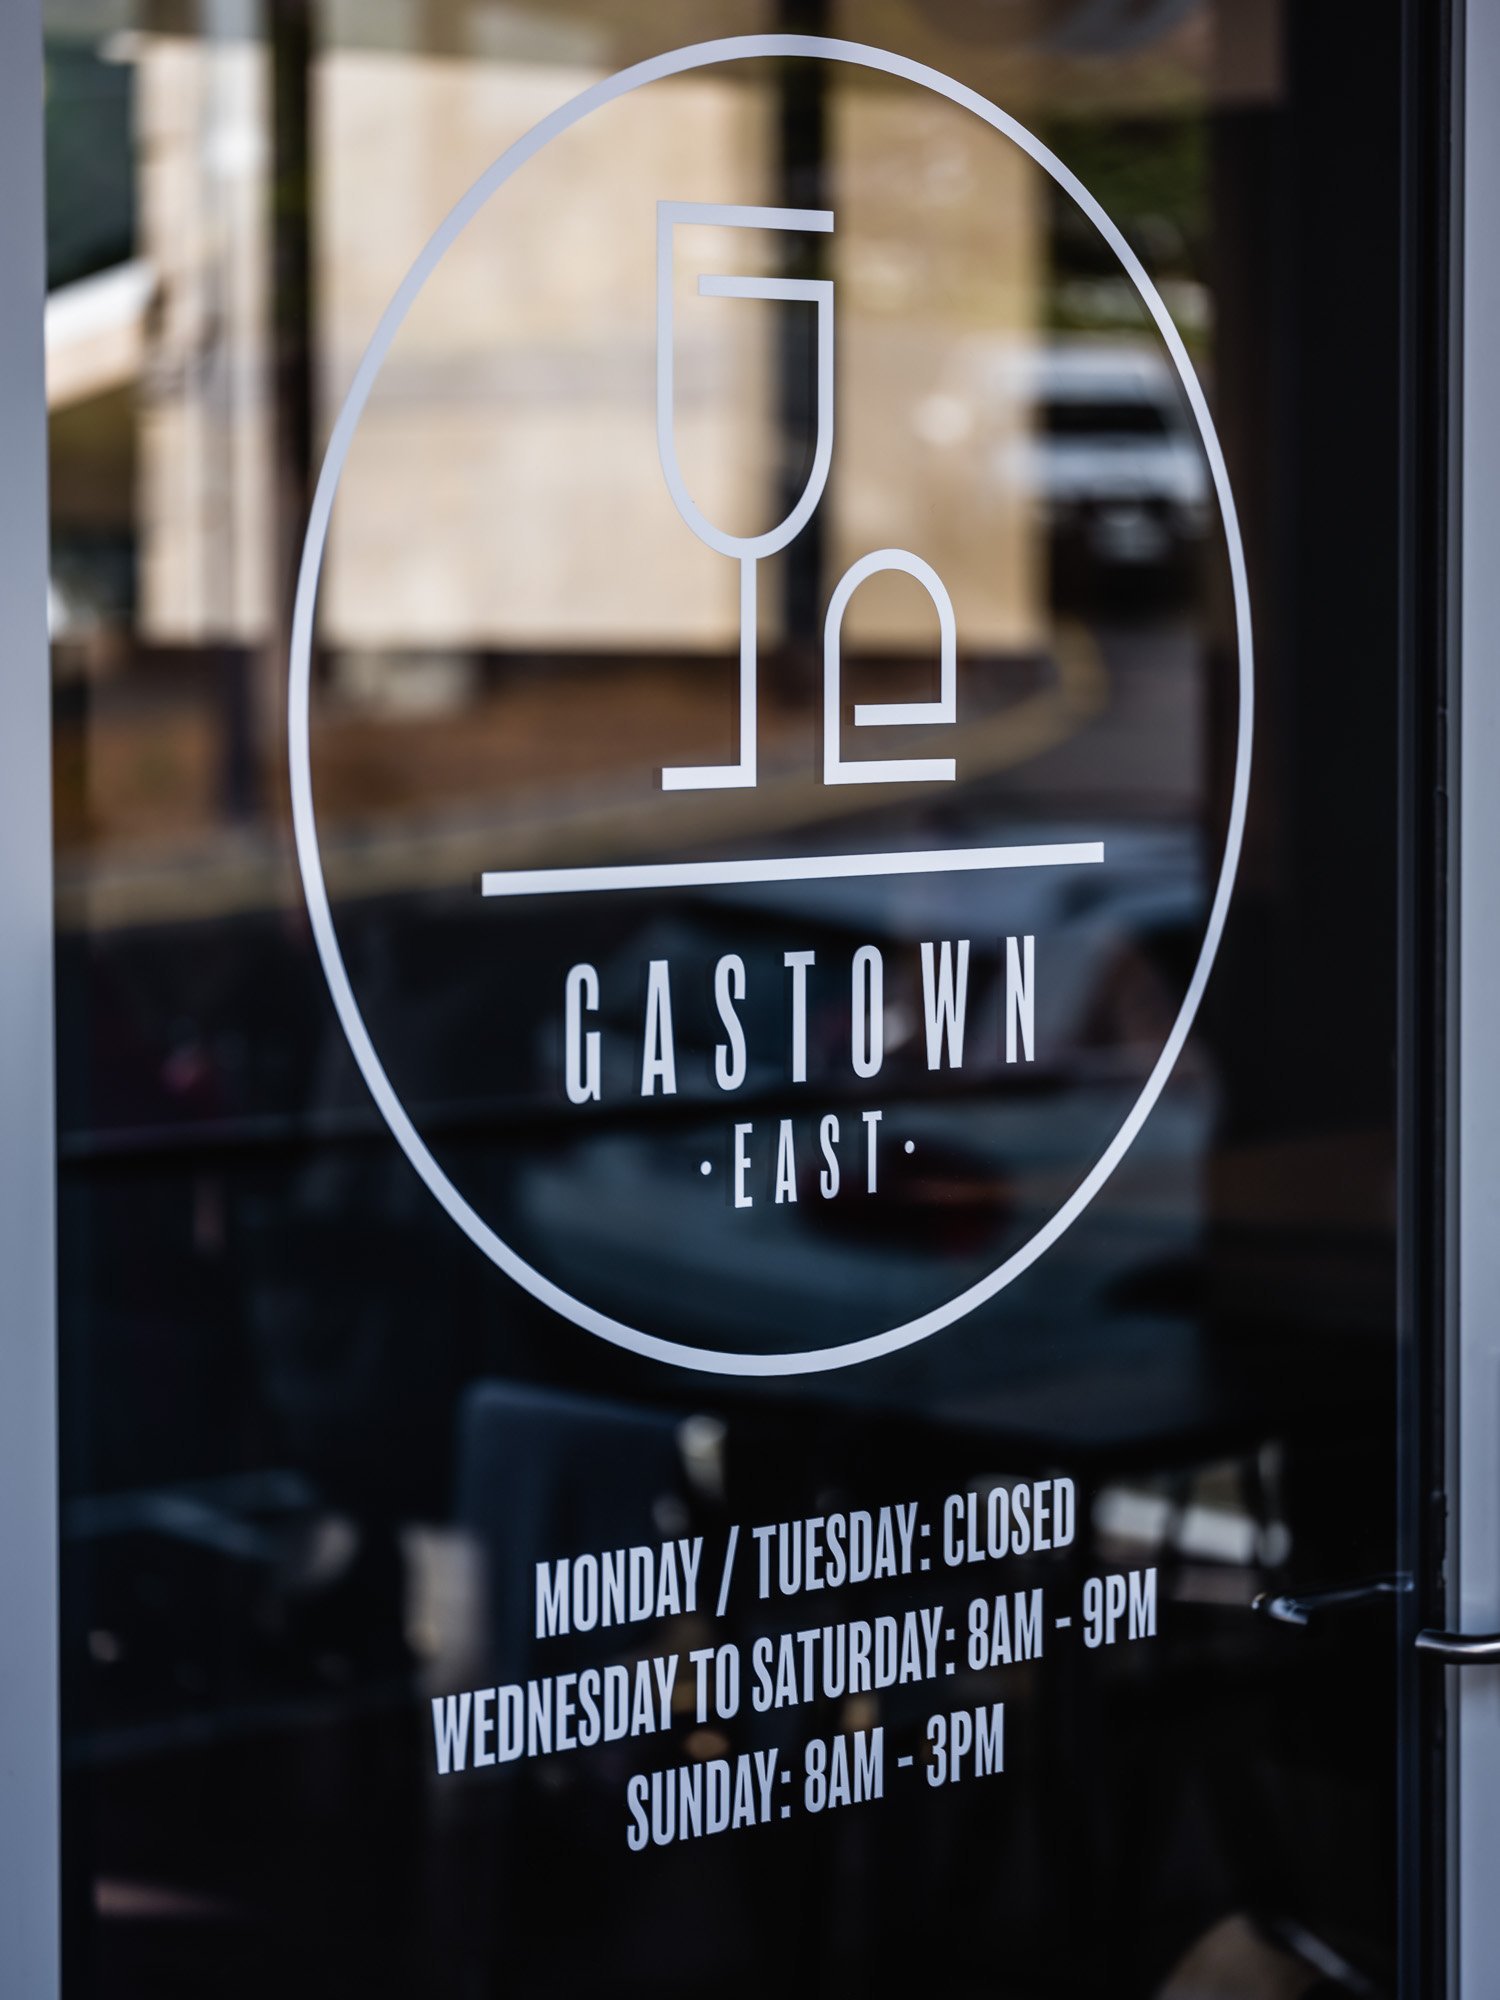 Gastown East - Restaurants Sydney 6